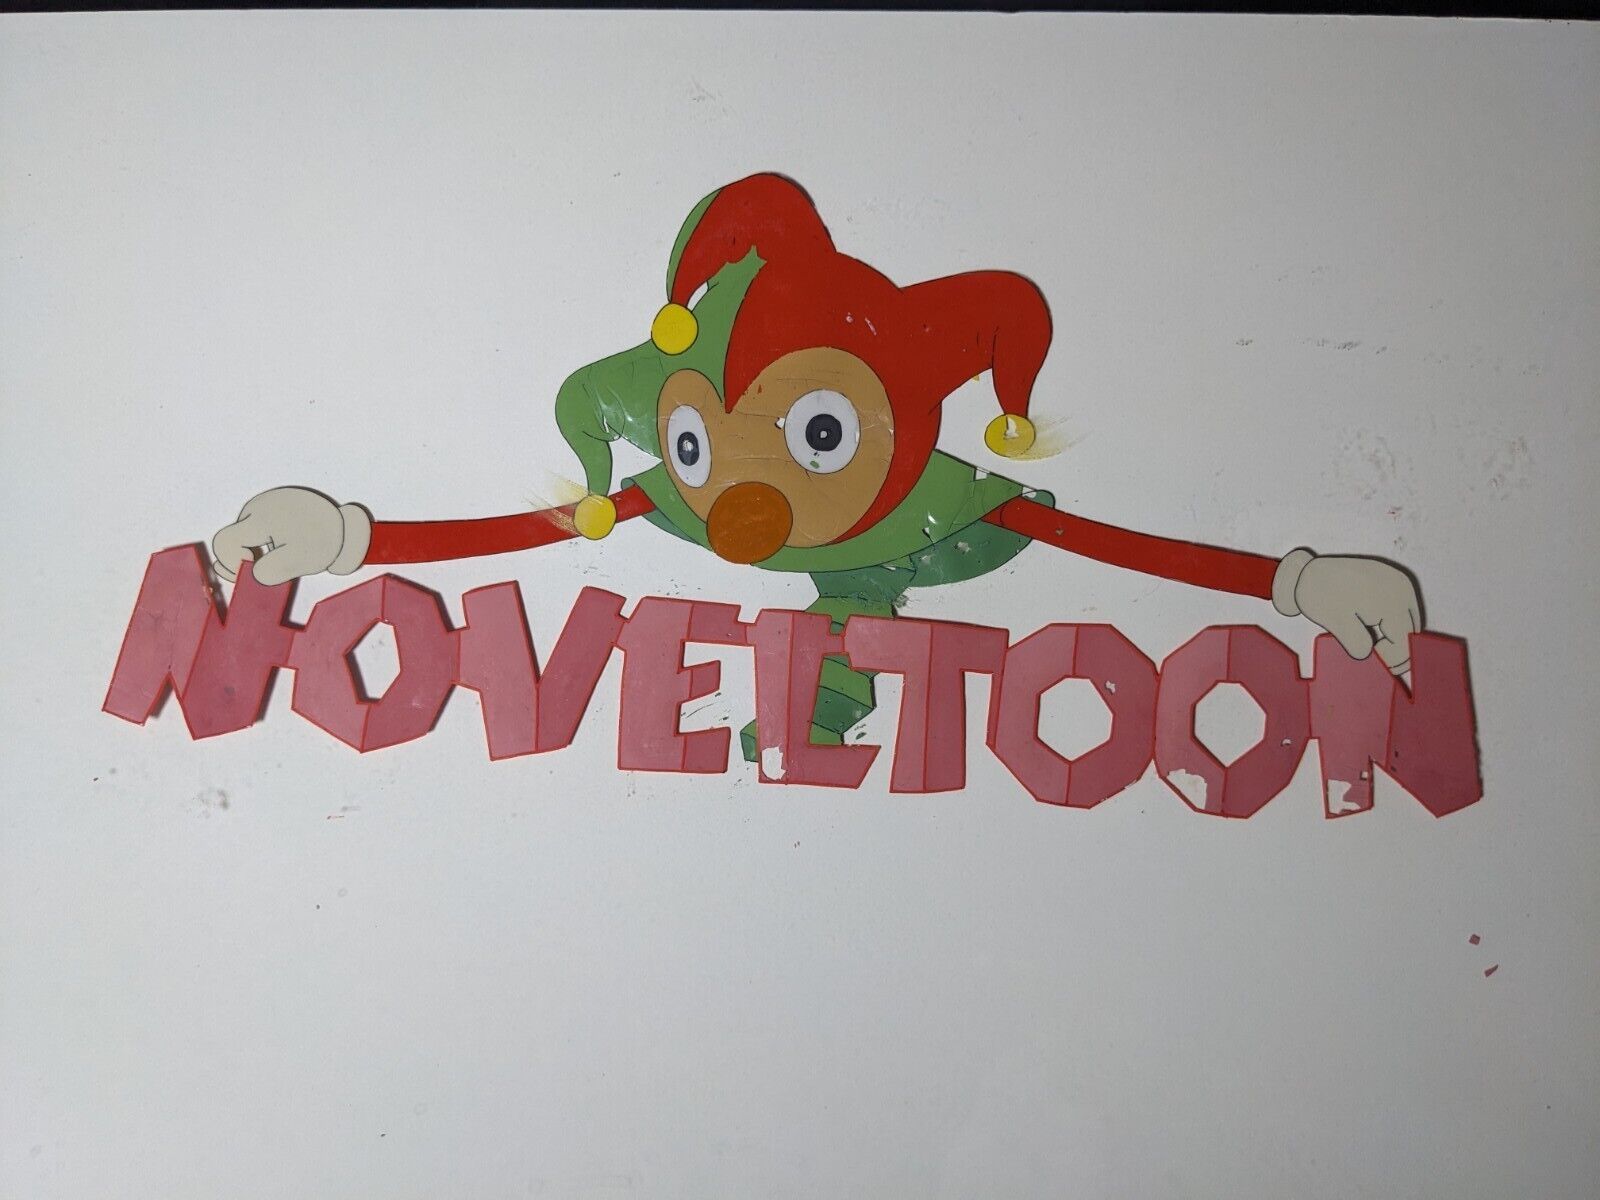 NOVELTOON animation Cel Main Title Logo 1940's Production Art Theatre Cartoon X1